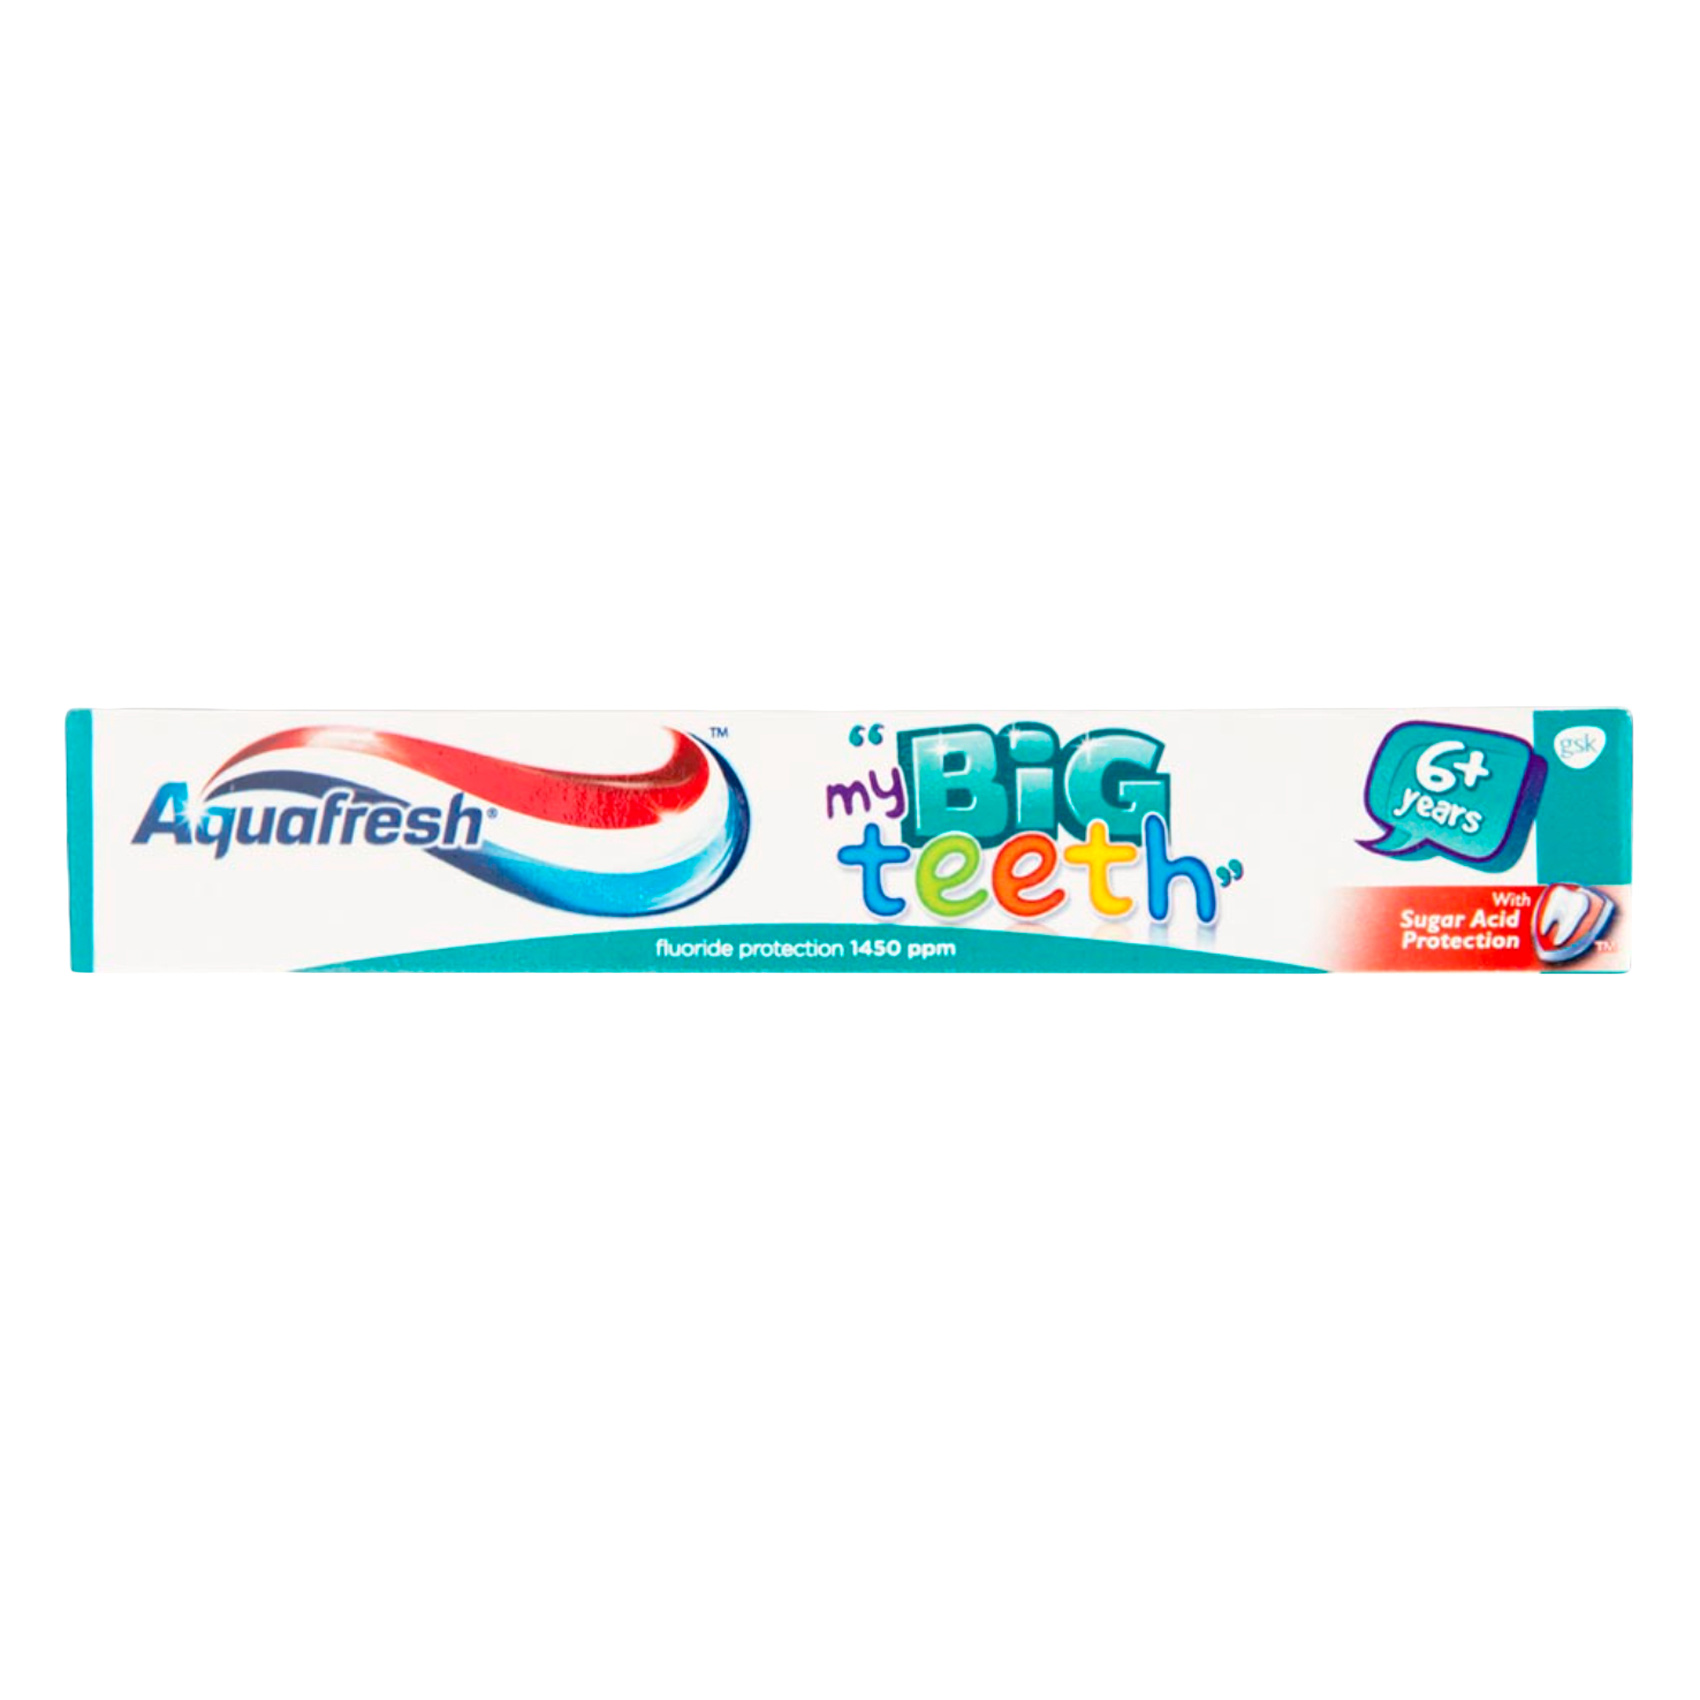 Aquafresh Tooth Paste Big Teeth 50Ml